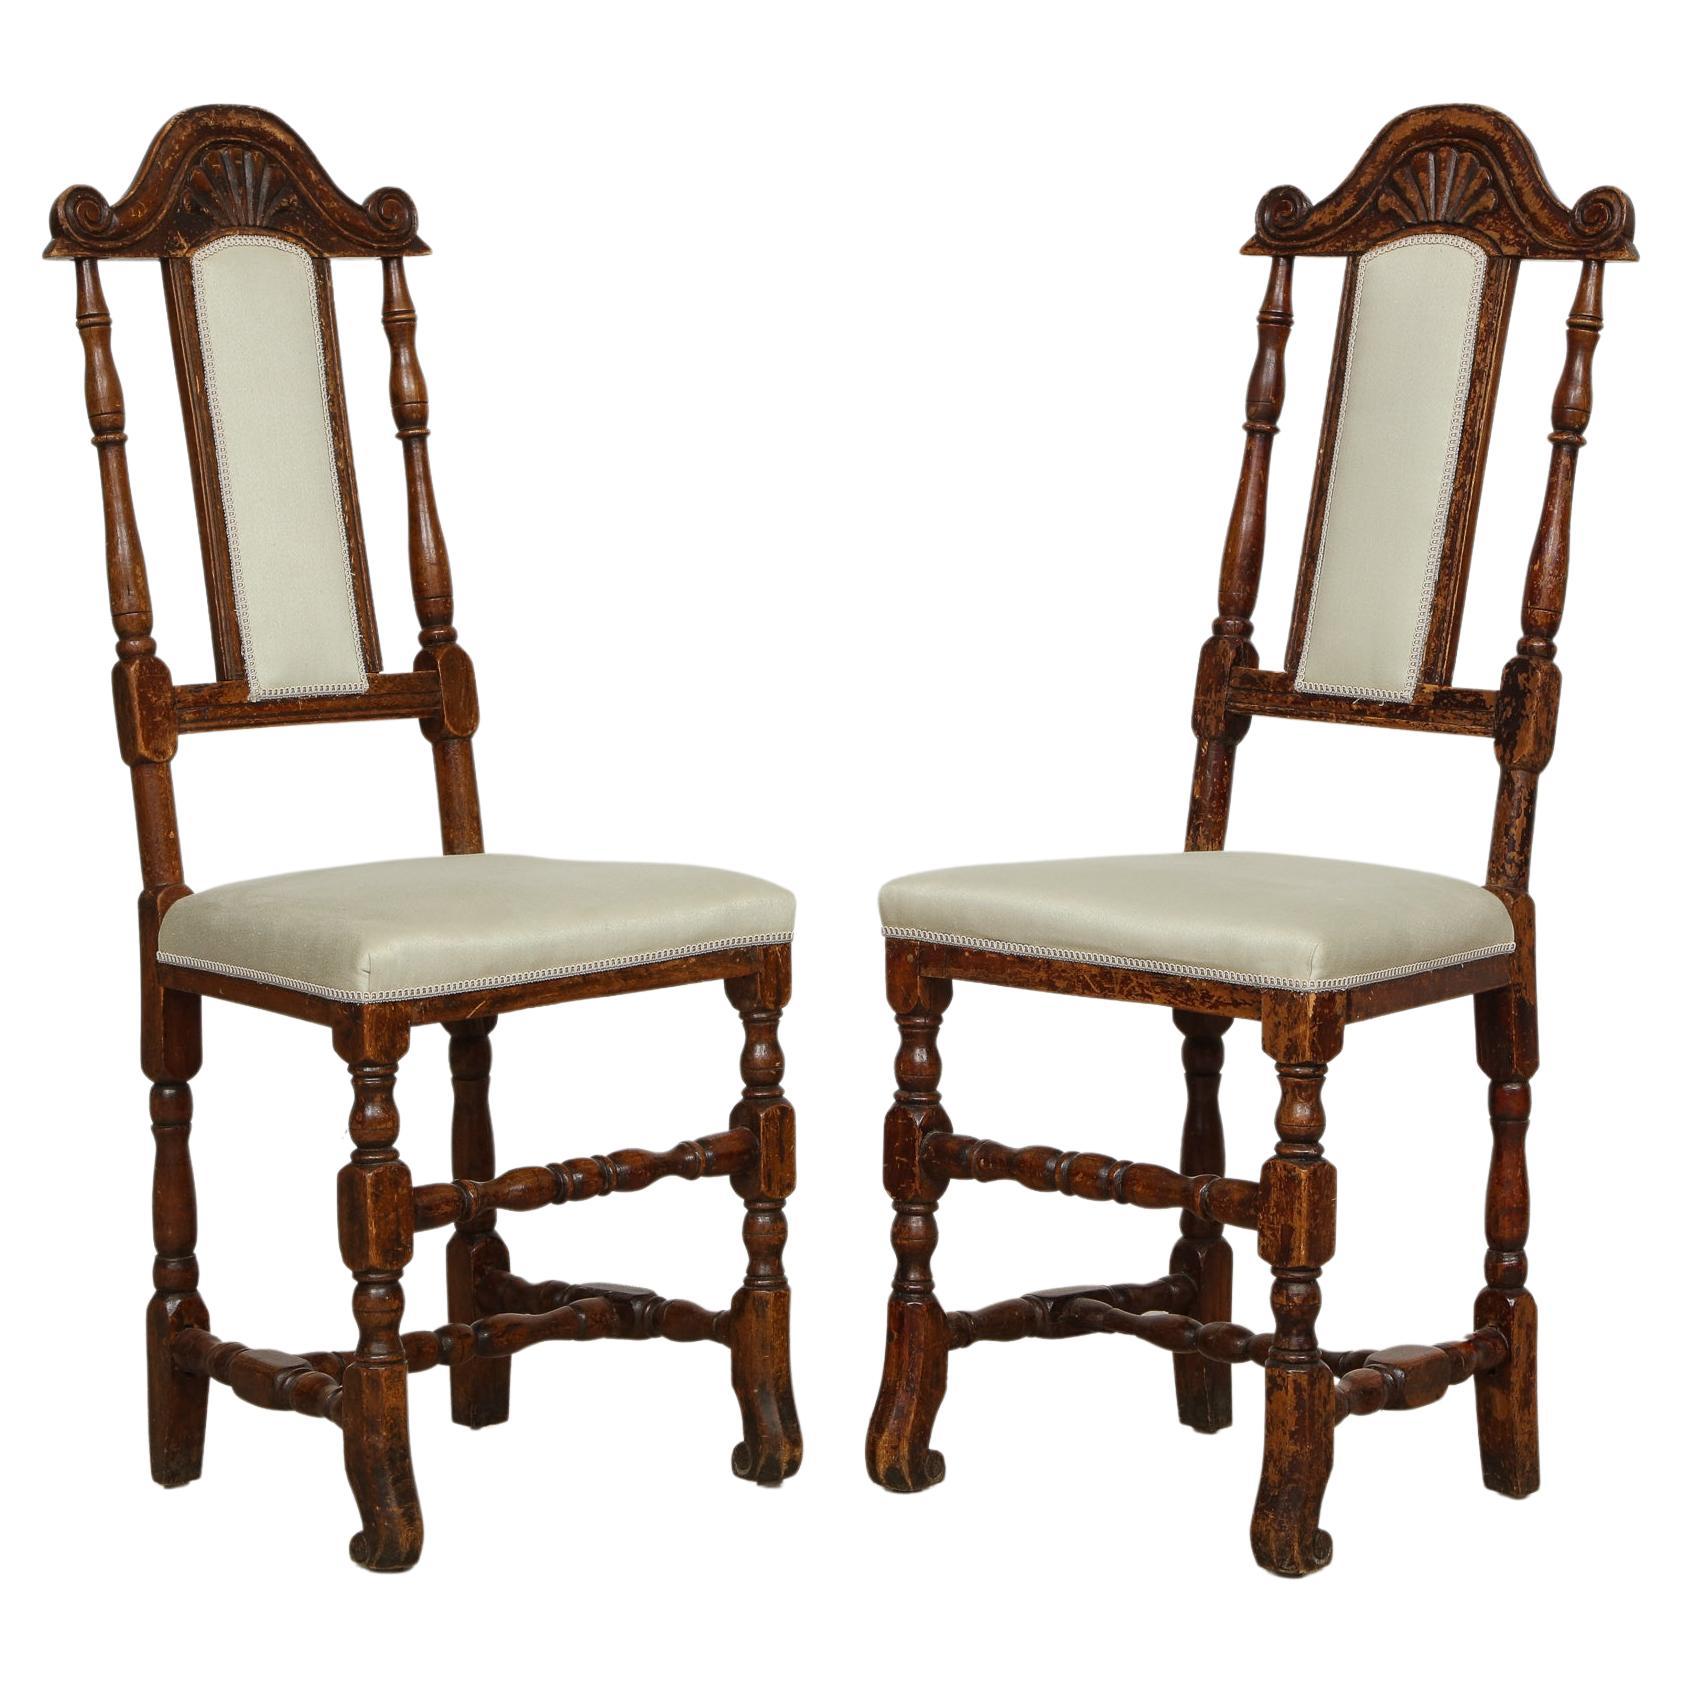 A Pair of Late Baroque Swedish Chairs, Origin: Sweden, Circa 1750-1760